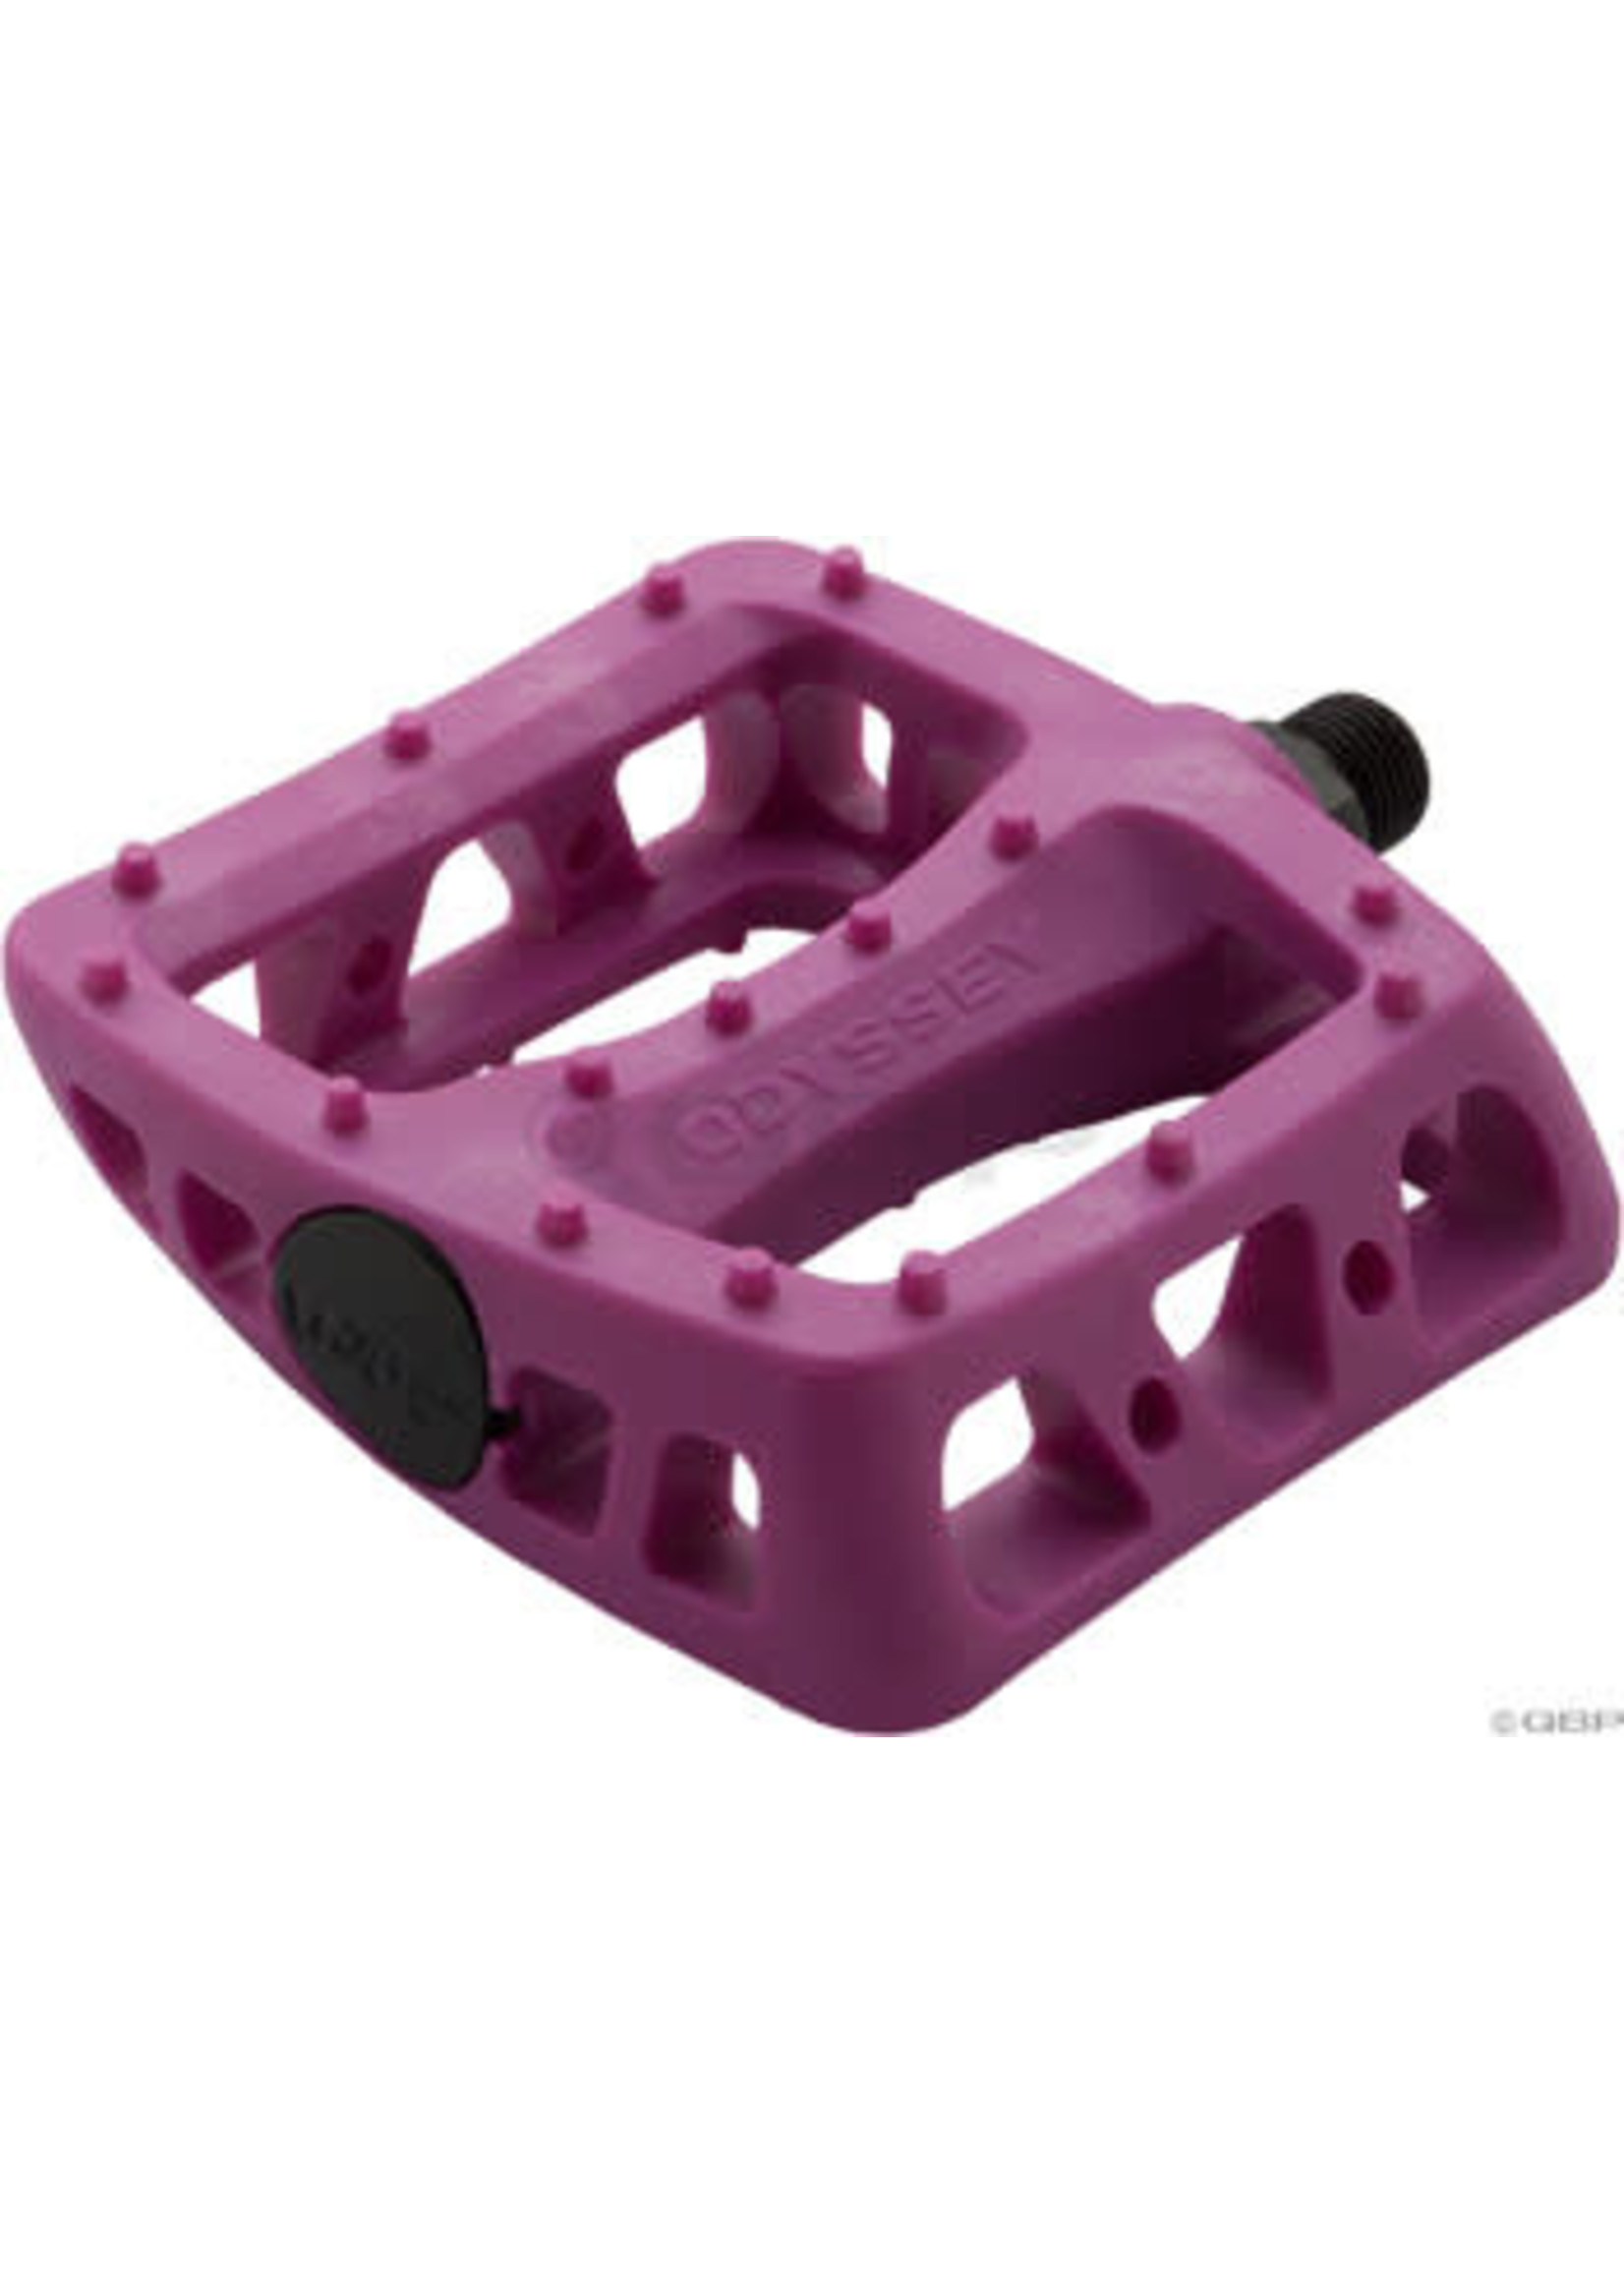 Odyssey Twisted PC Pedals - Platform, Composite/Plastic, 1/2", Purple